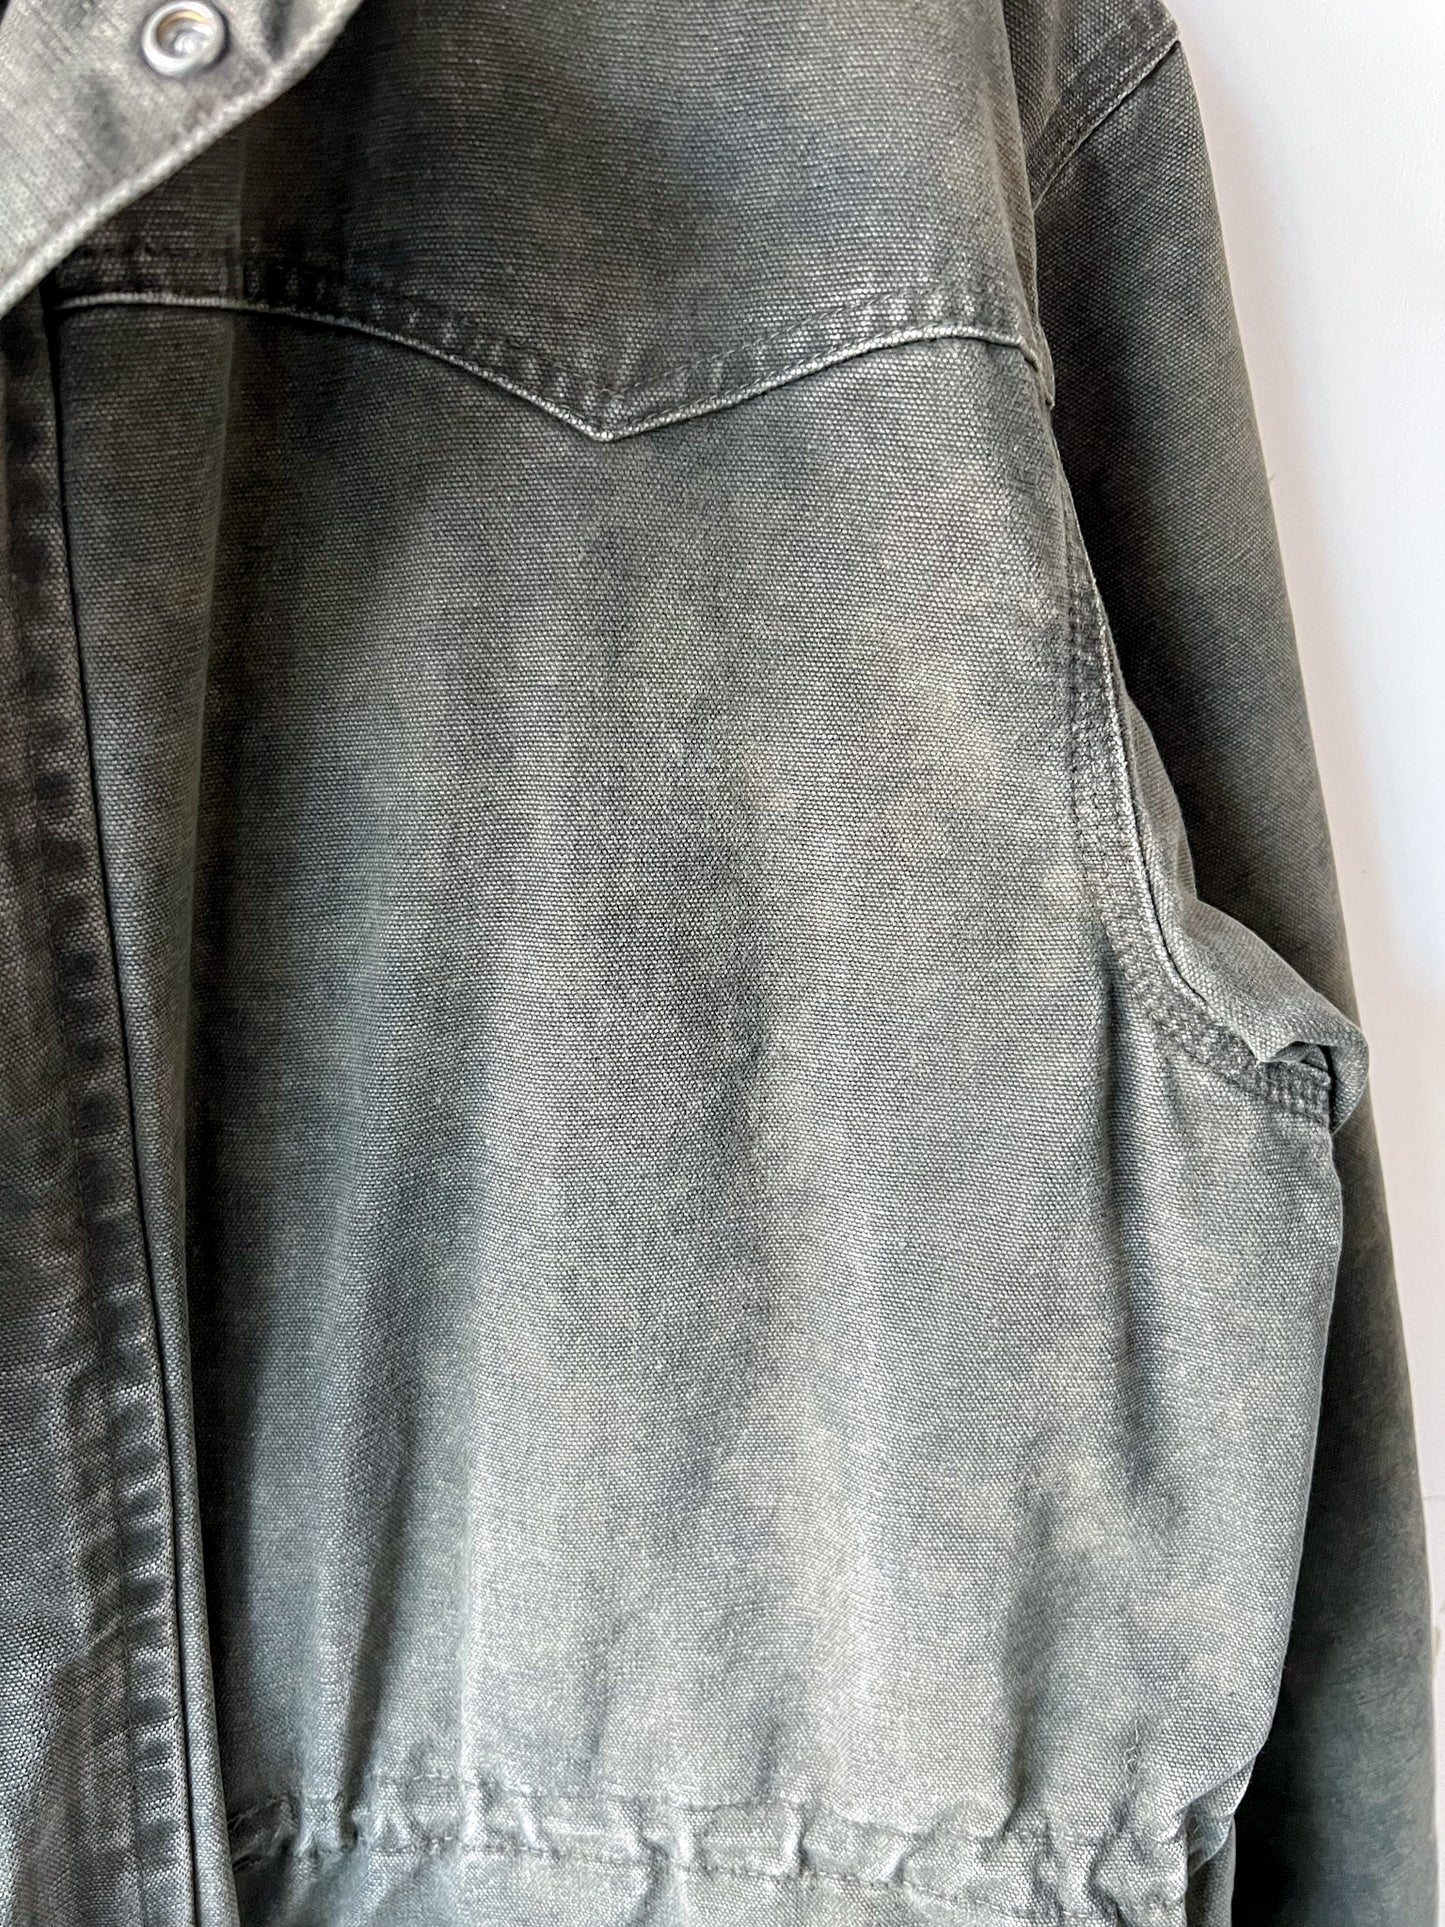 WACO - Vintage Y2K Carhartt Acid Washed Blanket Lined Barn Coat - Olive Green, Charcoal Gray - Unisex Medium